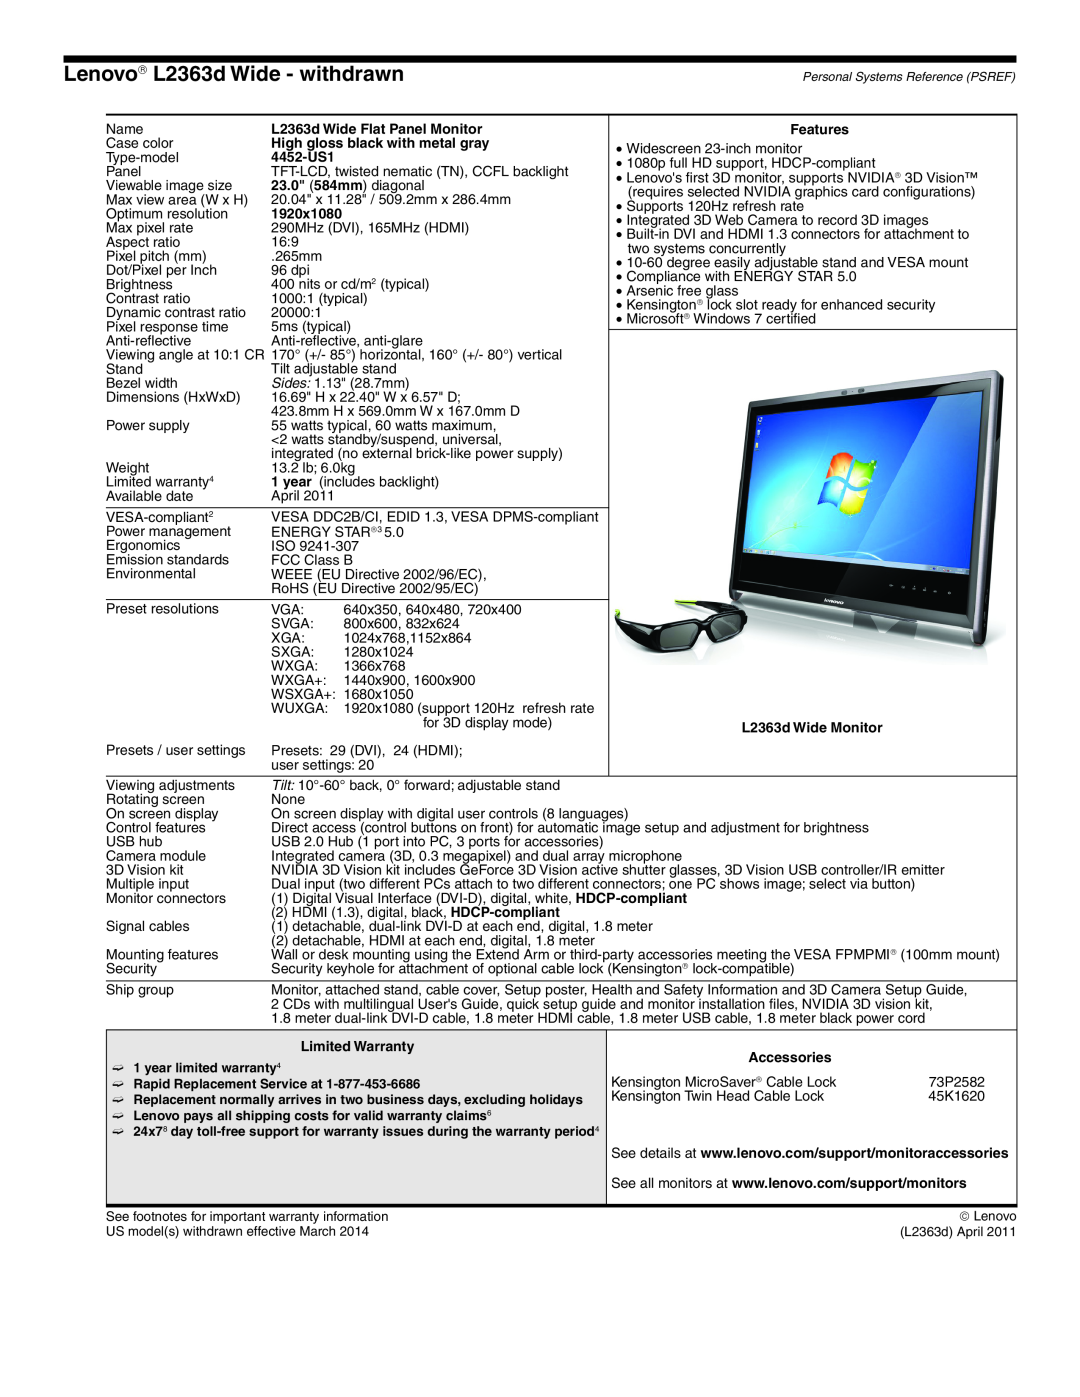 Lenovo L2363D manual Lenovo→ L2363d Wide - withdrawn 